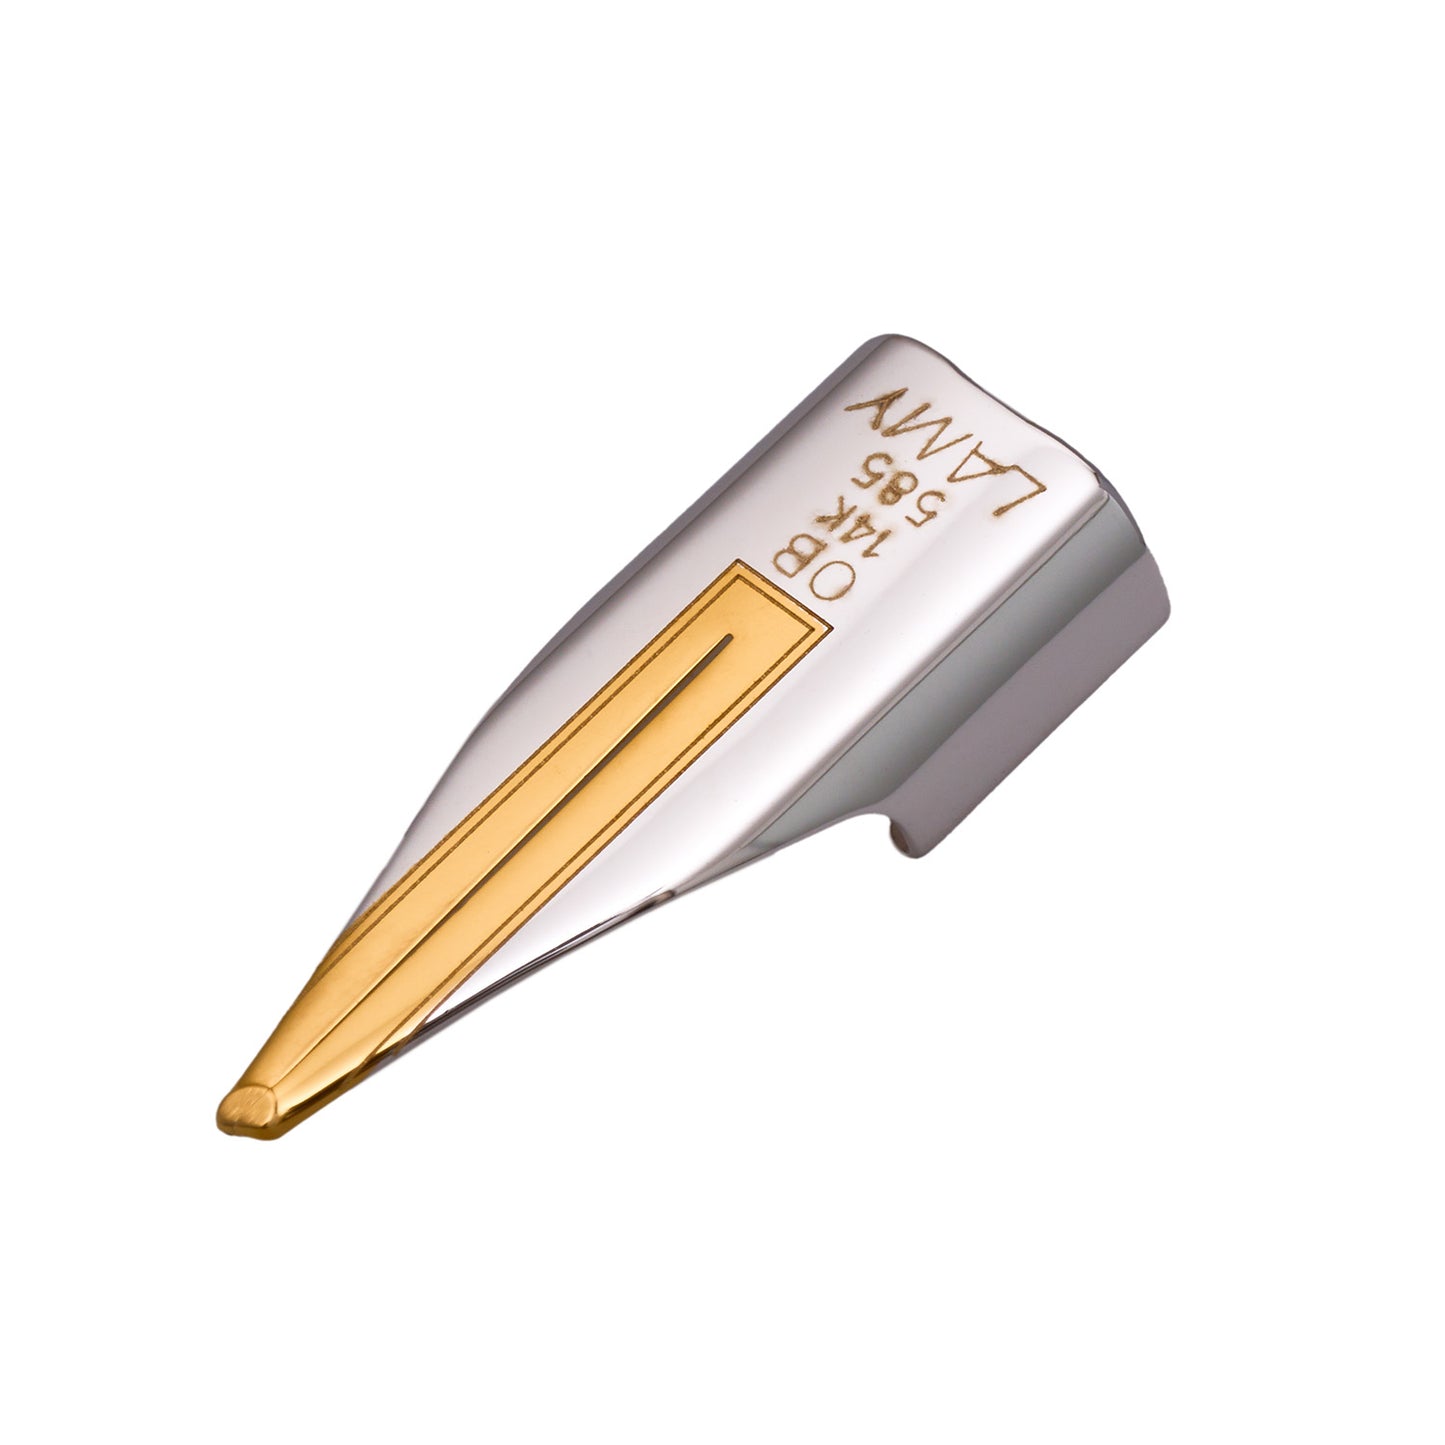 Lamy Z56 14k gold imporium fountain pen nib OB Oblique Broad made in Germany